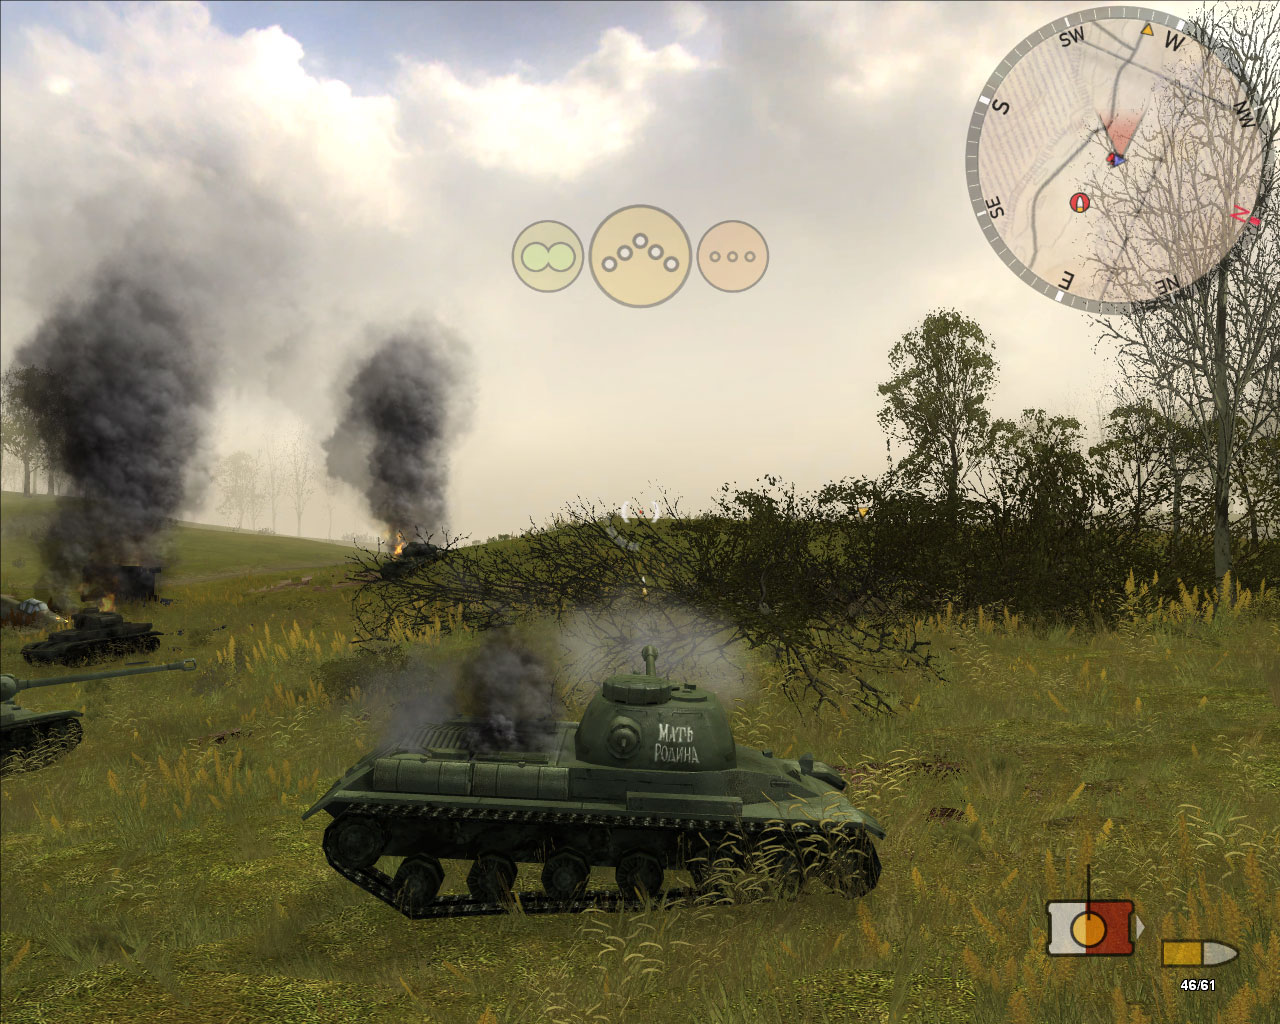 Игра танков едет. Игра Panzer Elite. Игра Panzer Elite Action: танковая гвардия. Panzer Elite танковая гвардия. Игры про танки Panzer Elite.